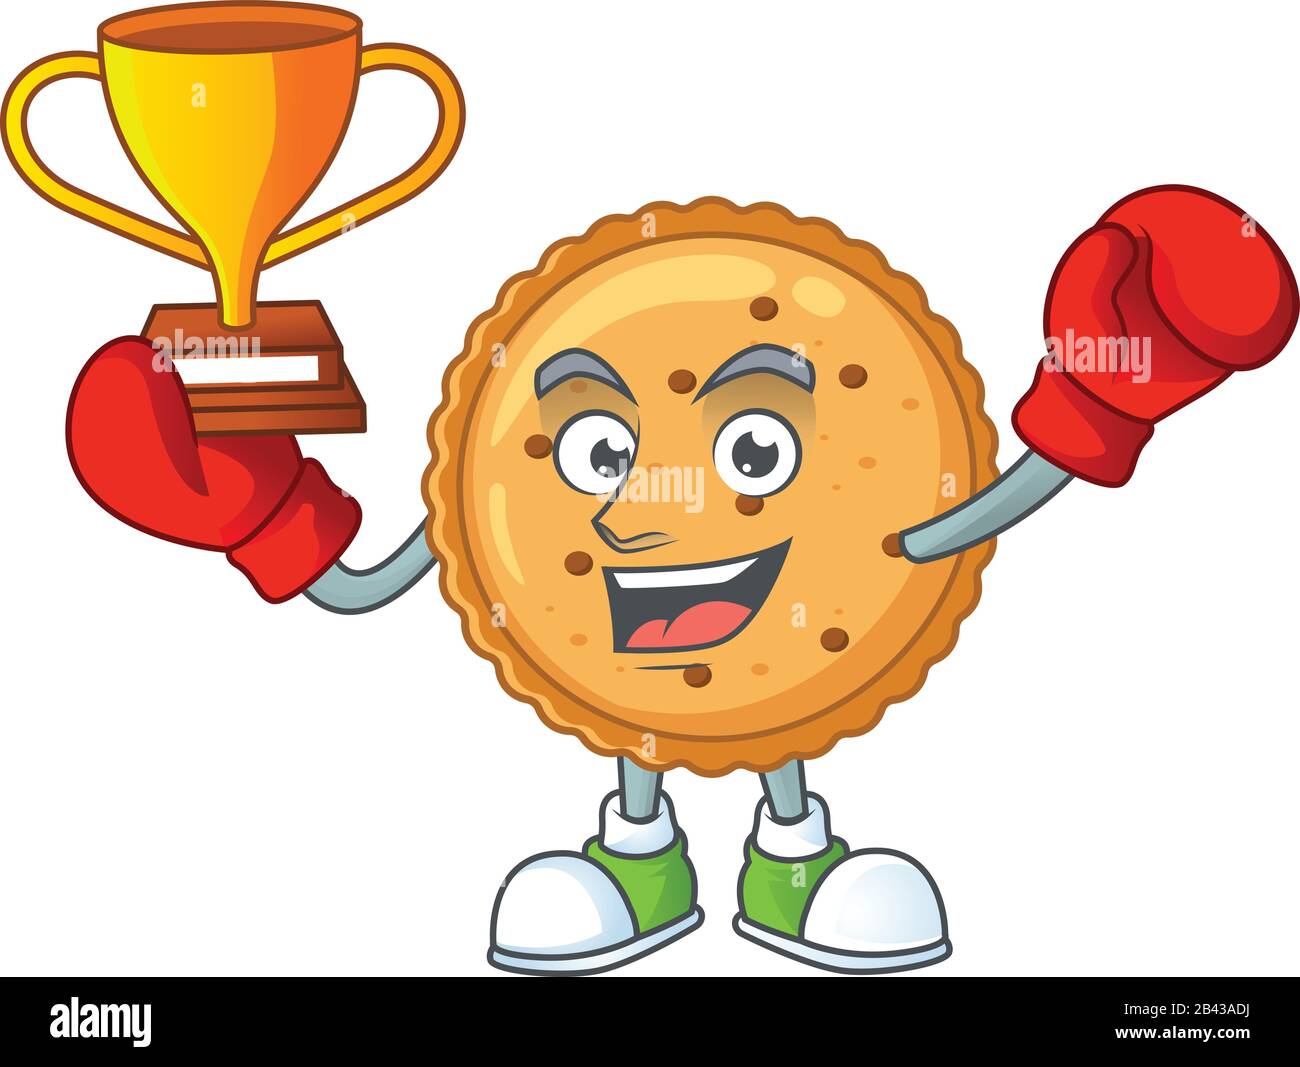 Super cool Boxing winner of peanut butter cookies in mascot cartoon design  Stock Vector Image & Art - Alamy